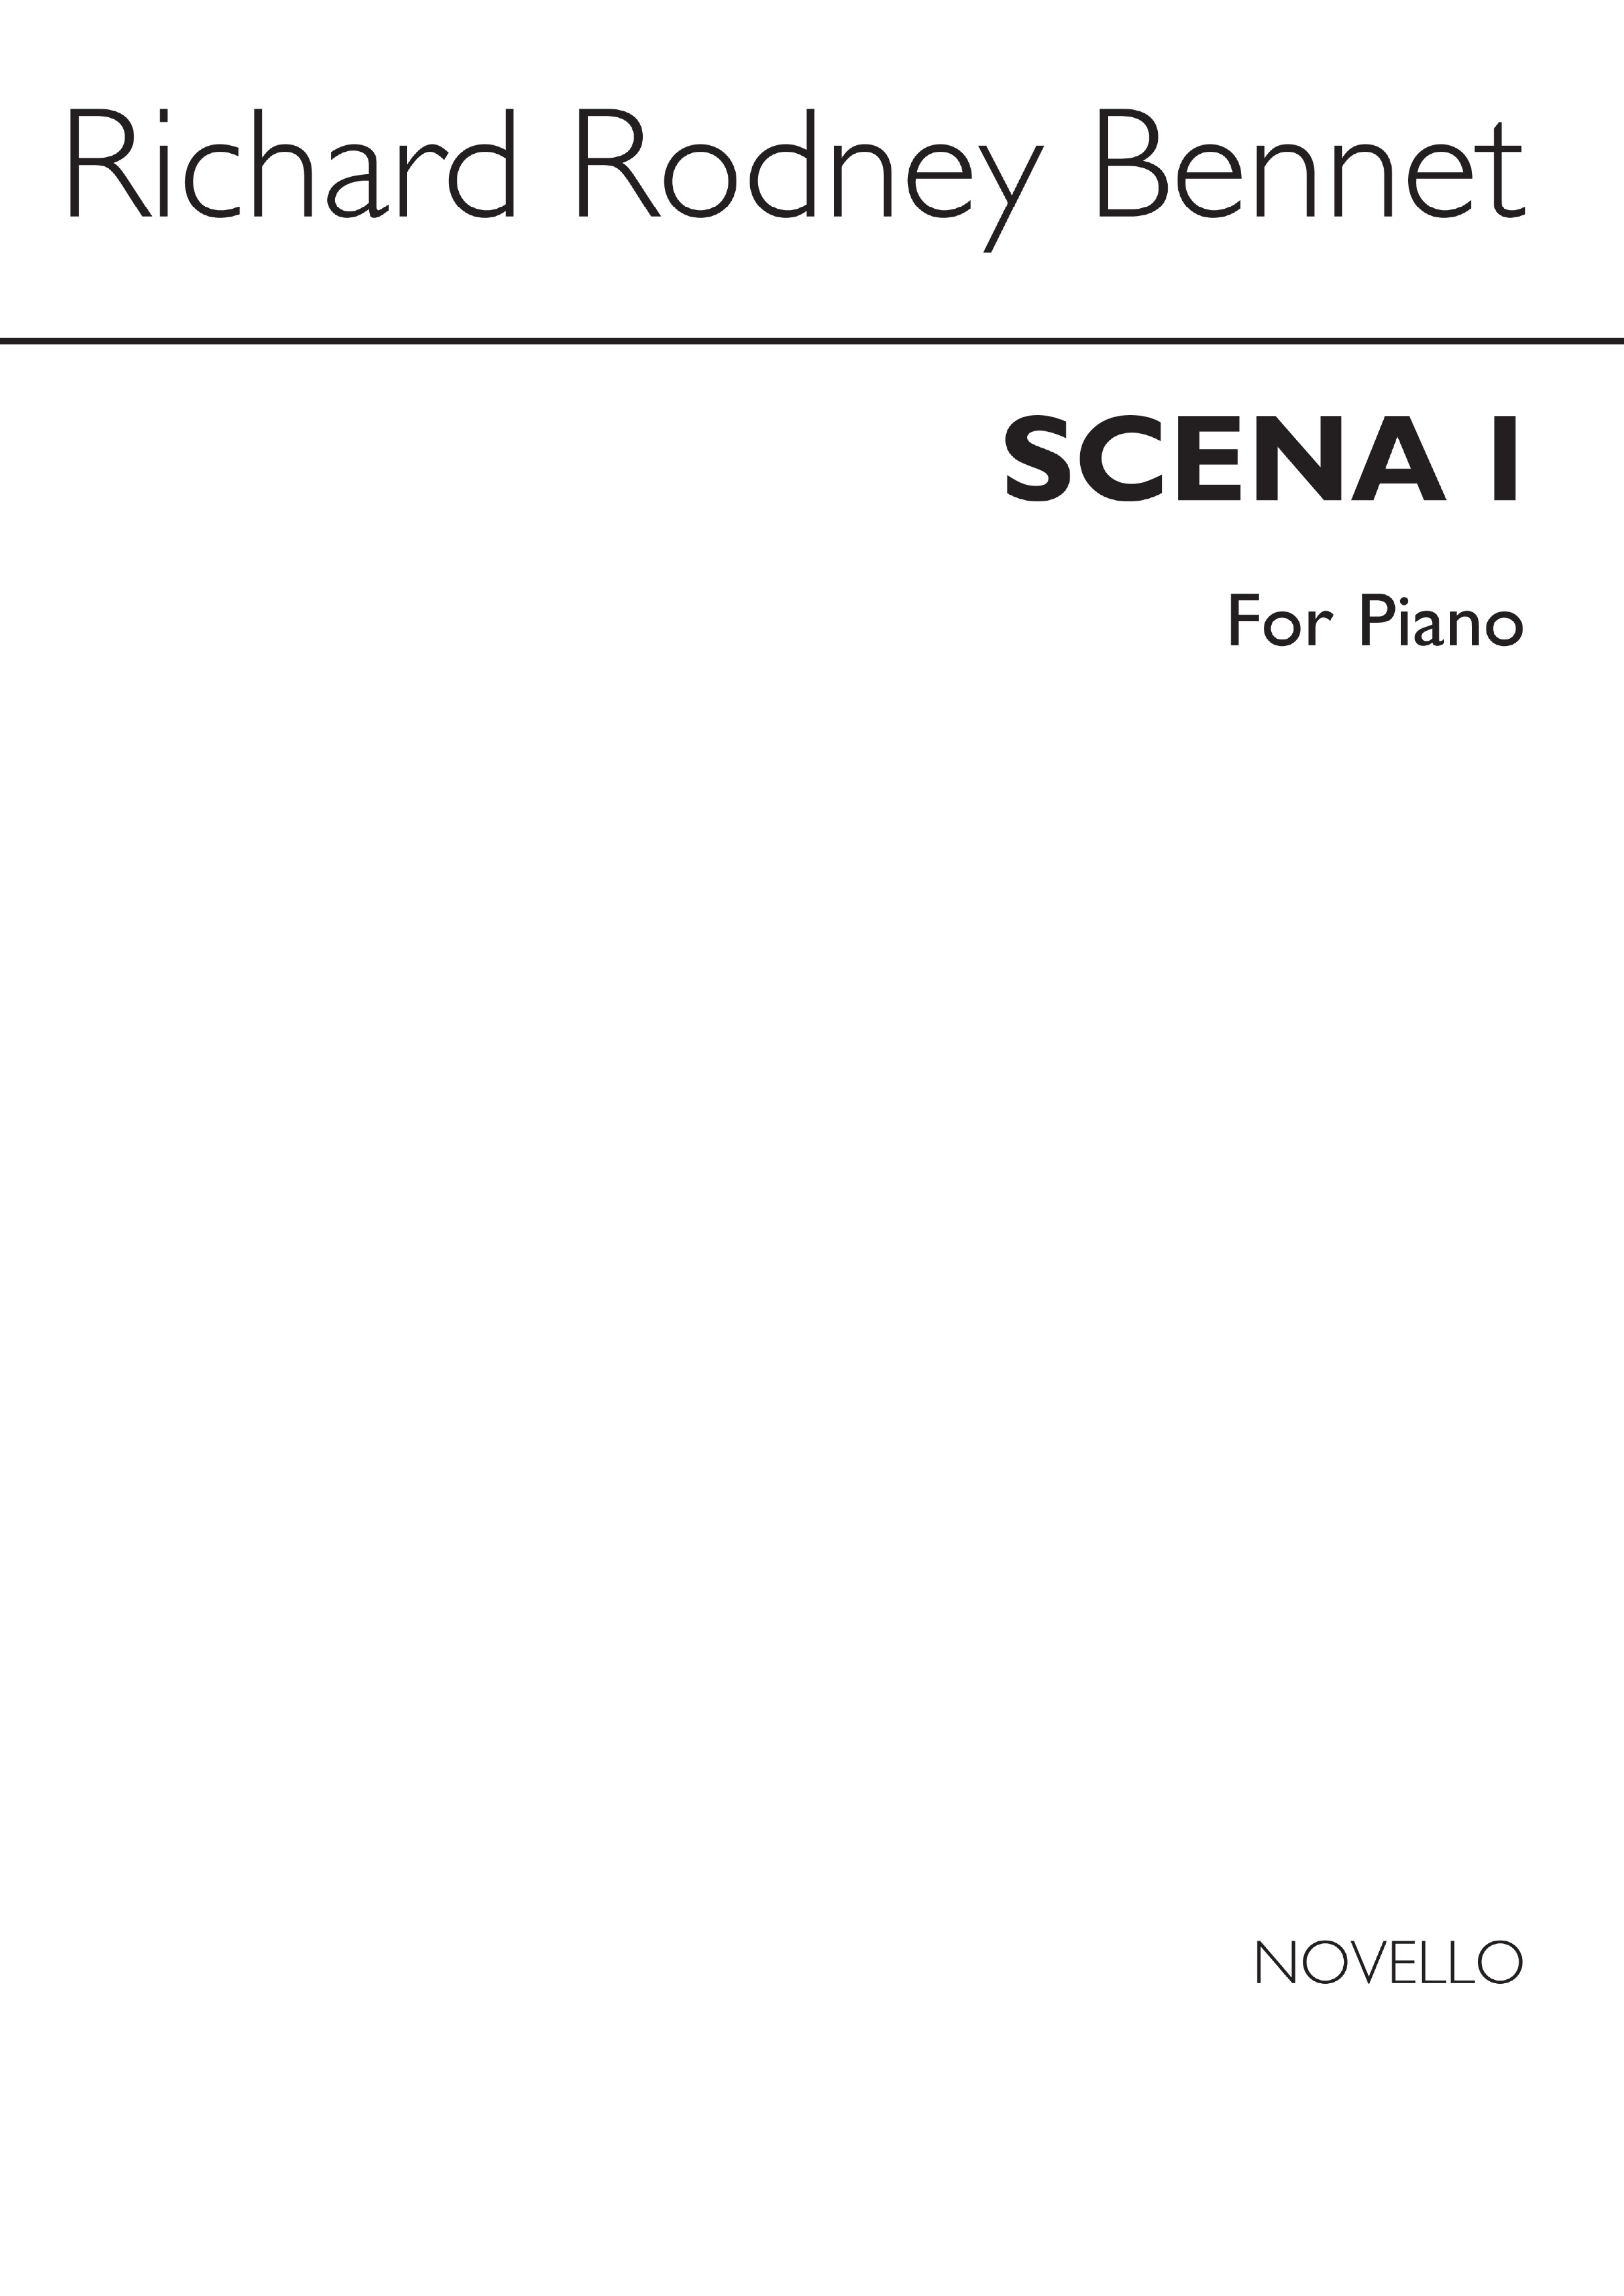 RR Bennett: Scena I for Piano